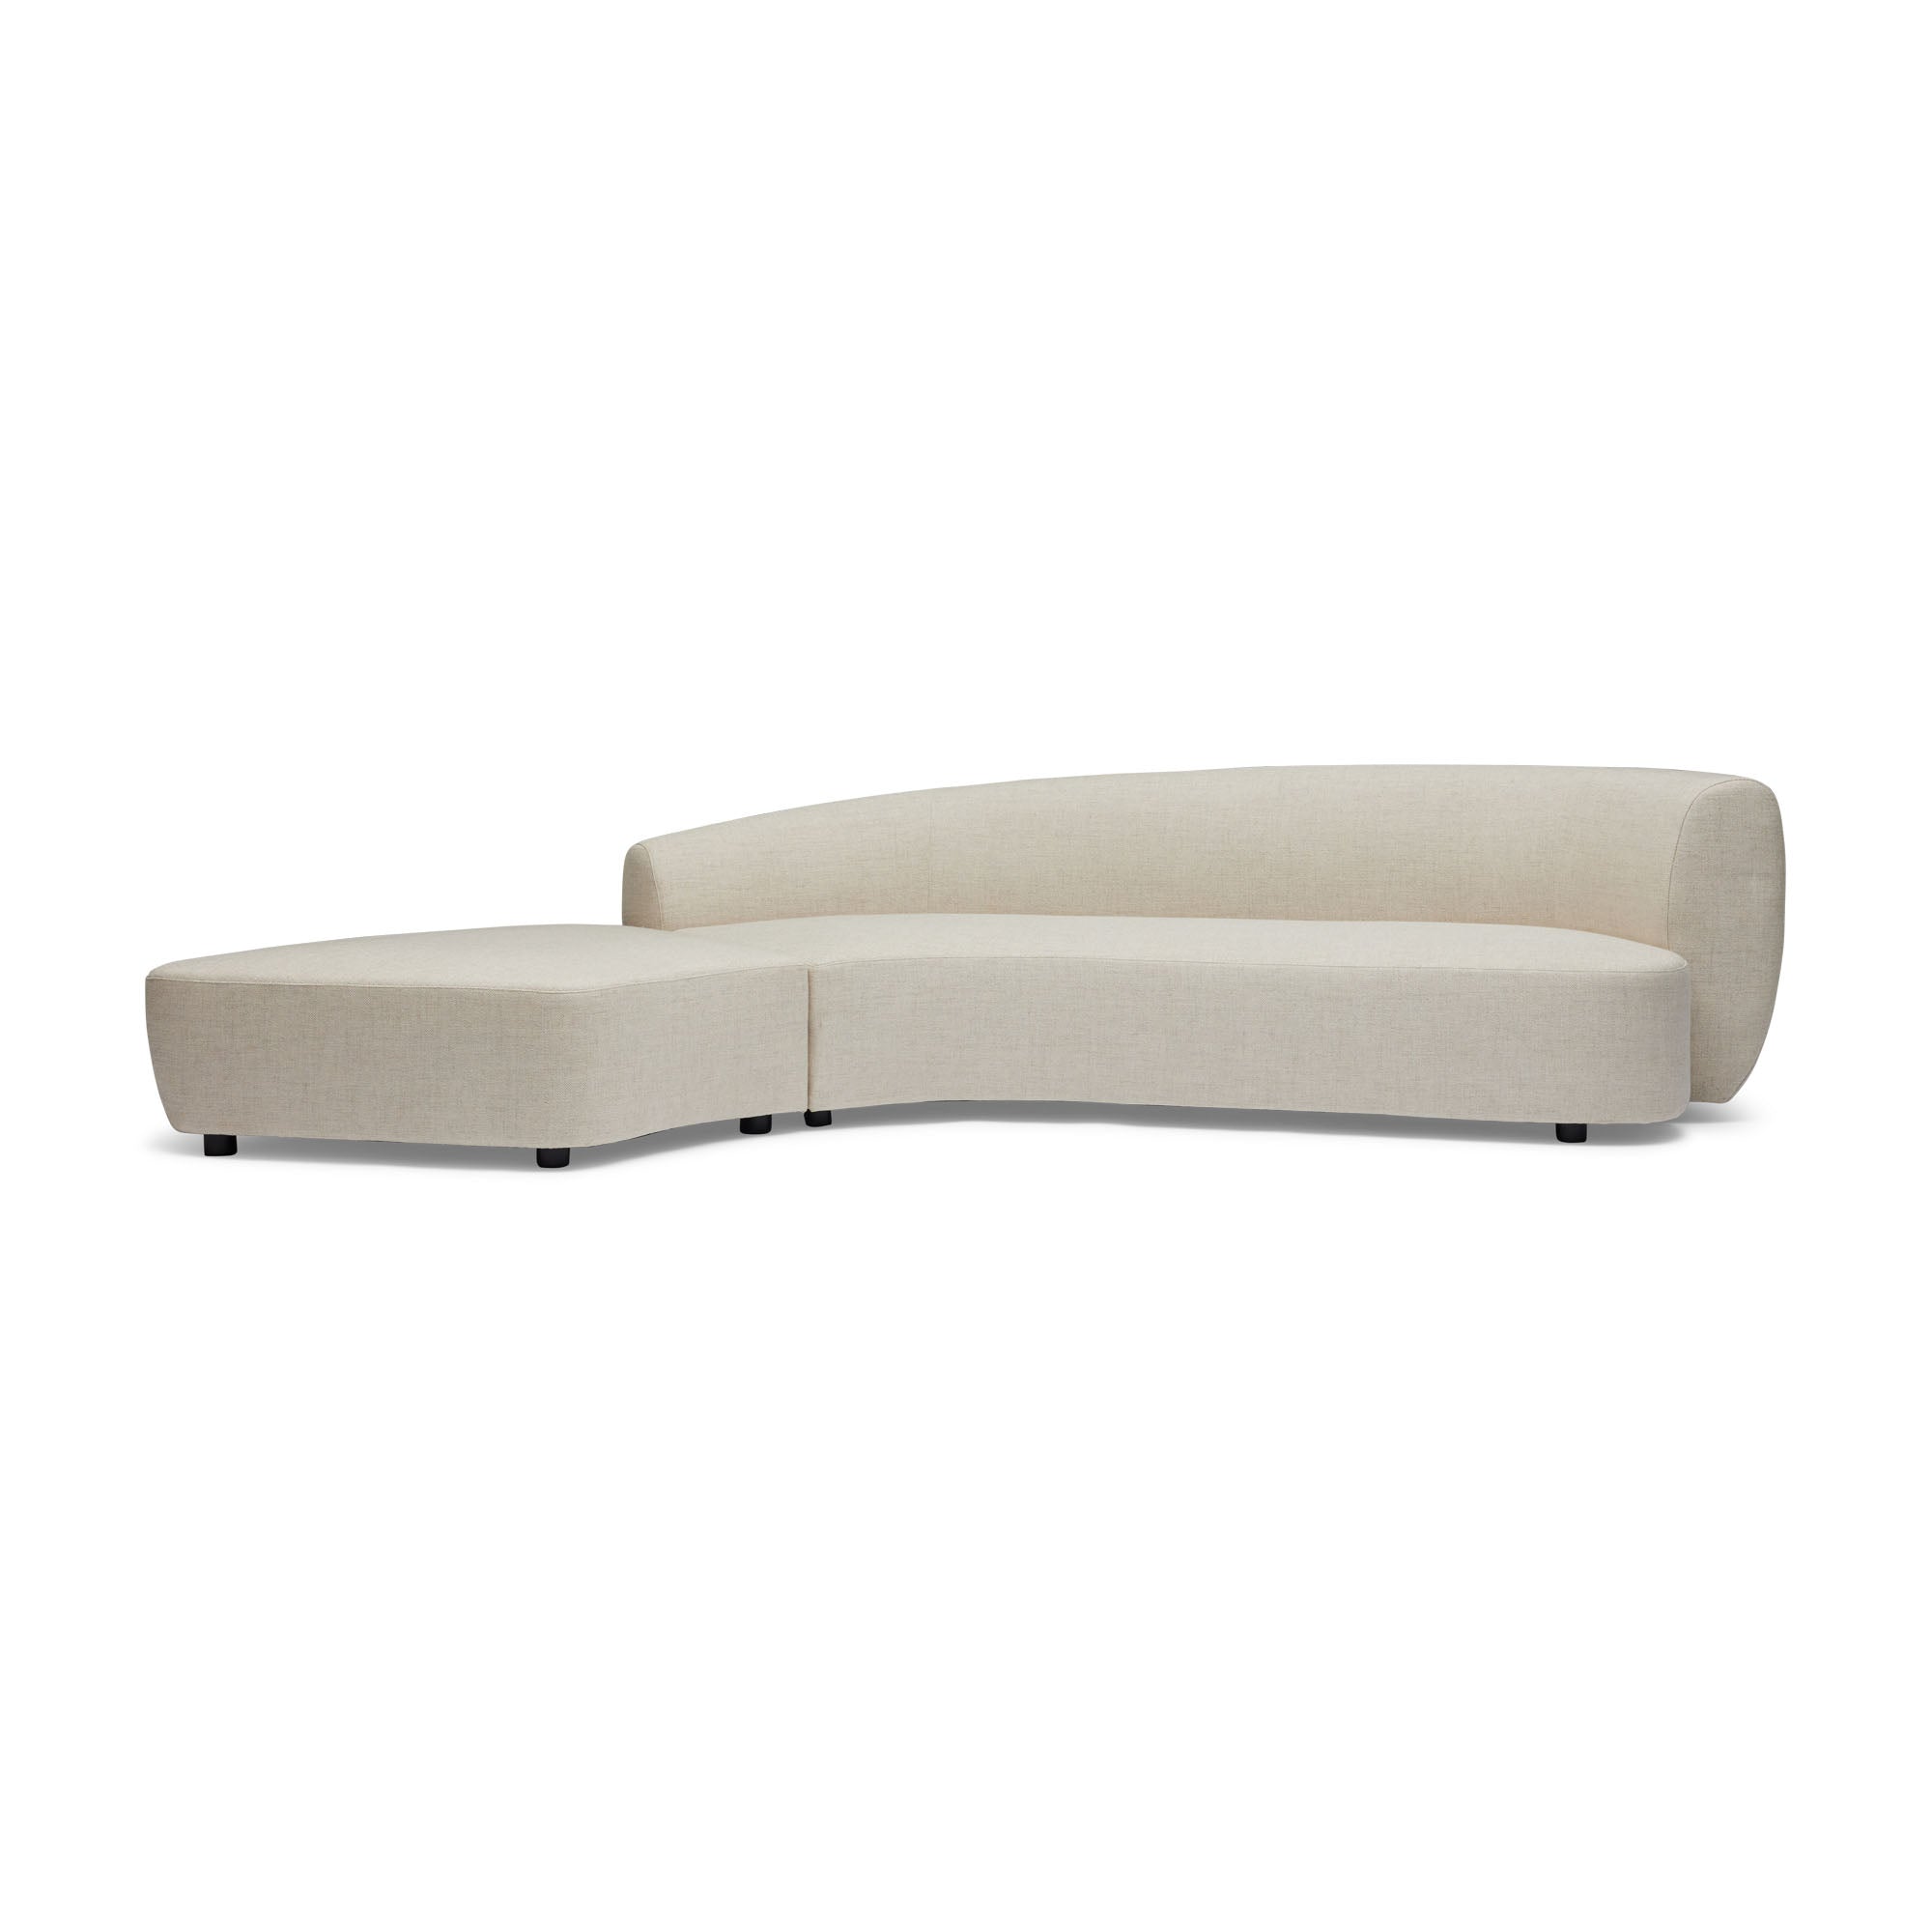 Celine Sectional Sofa Ivory Left